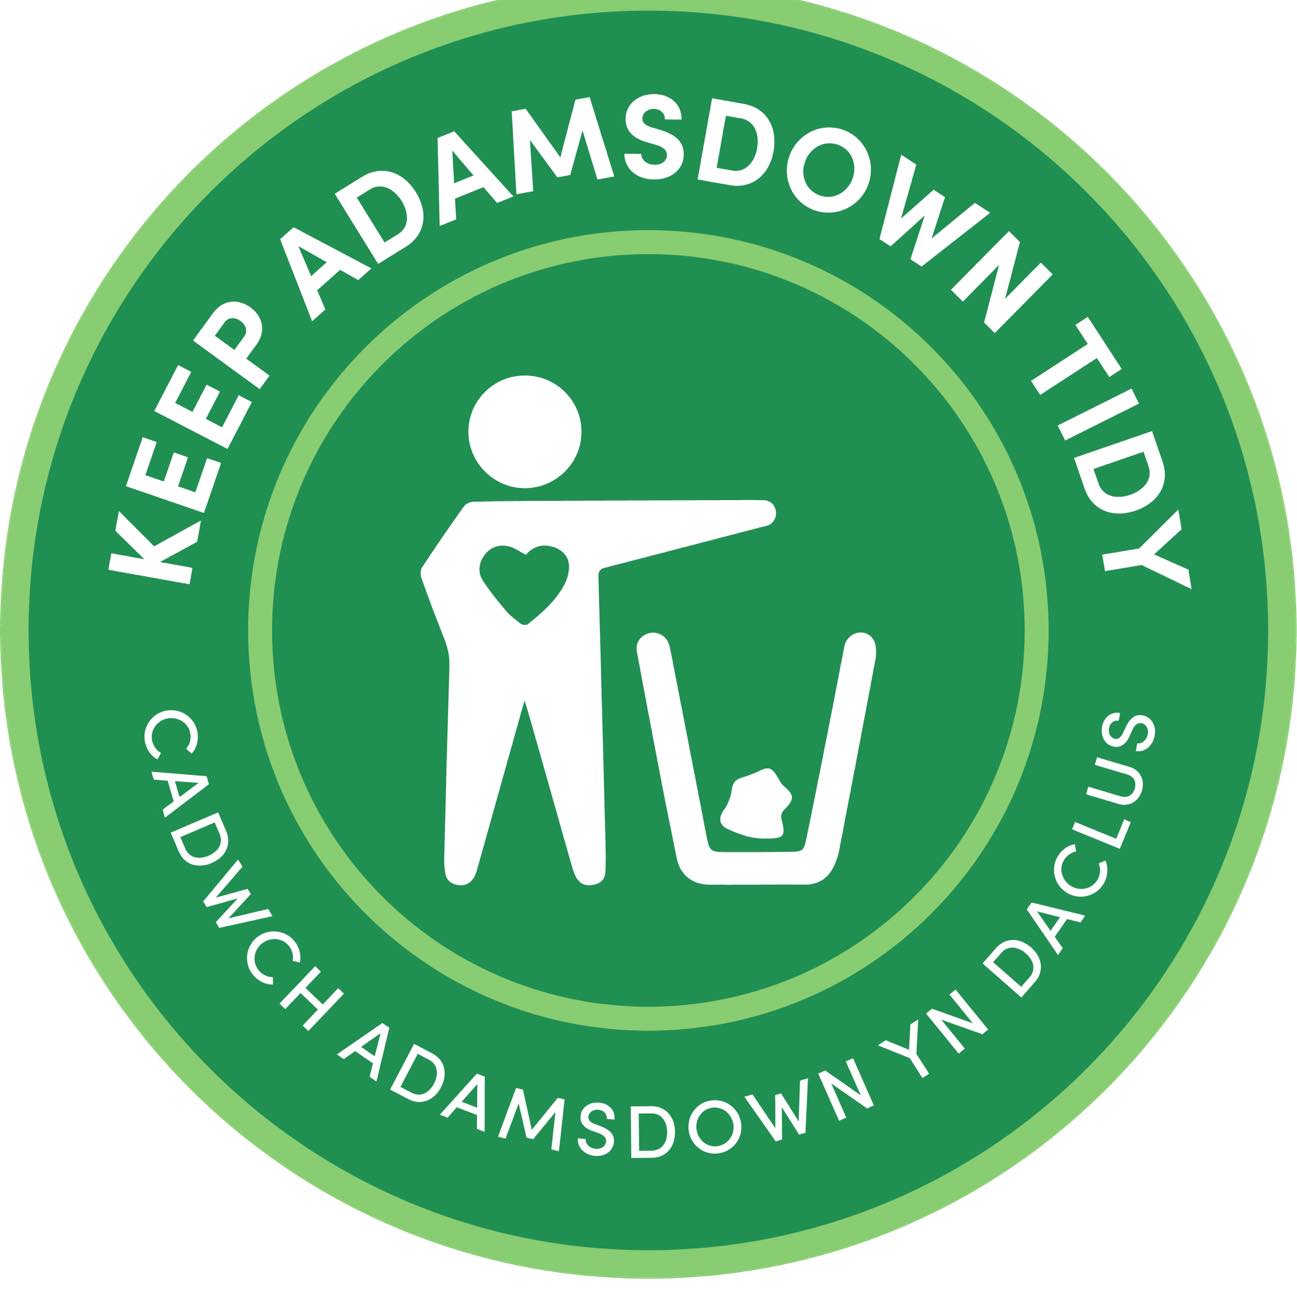 Keep Adamsdown Tidy -  Community Litter Pick